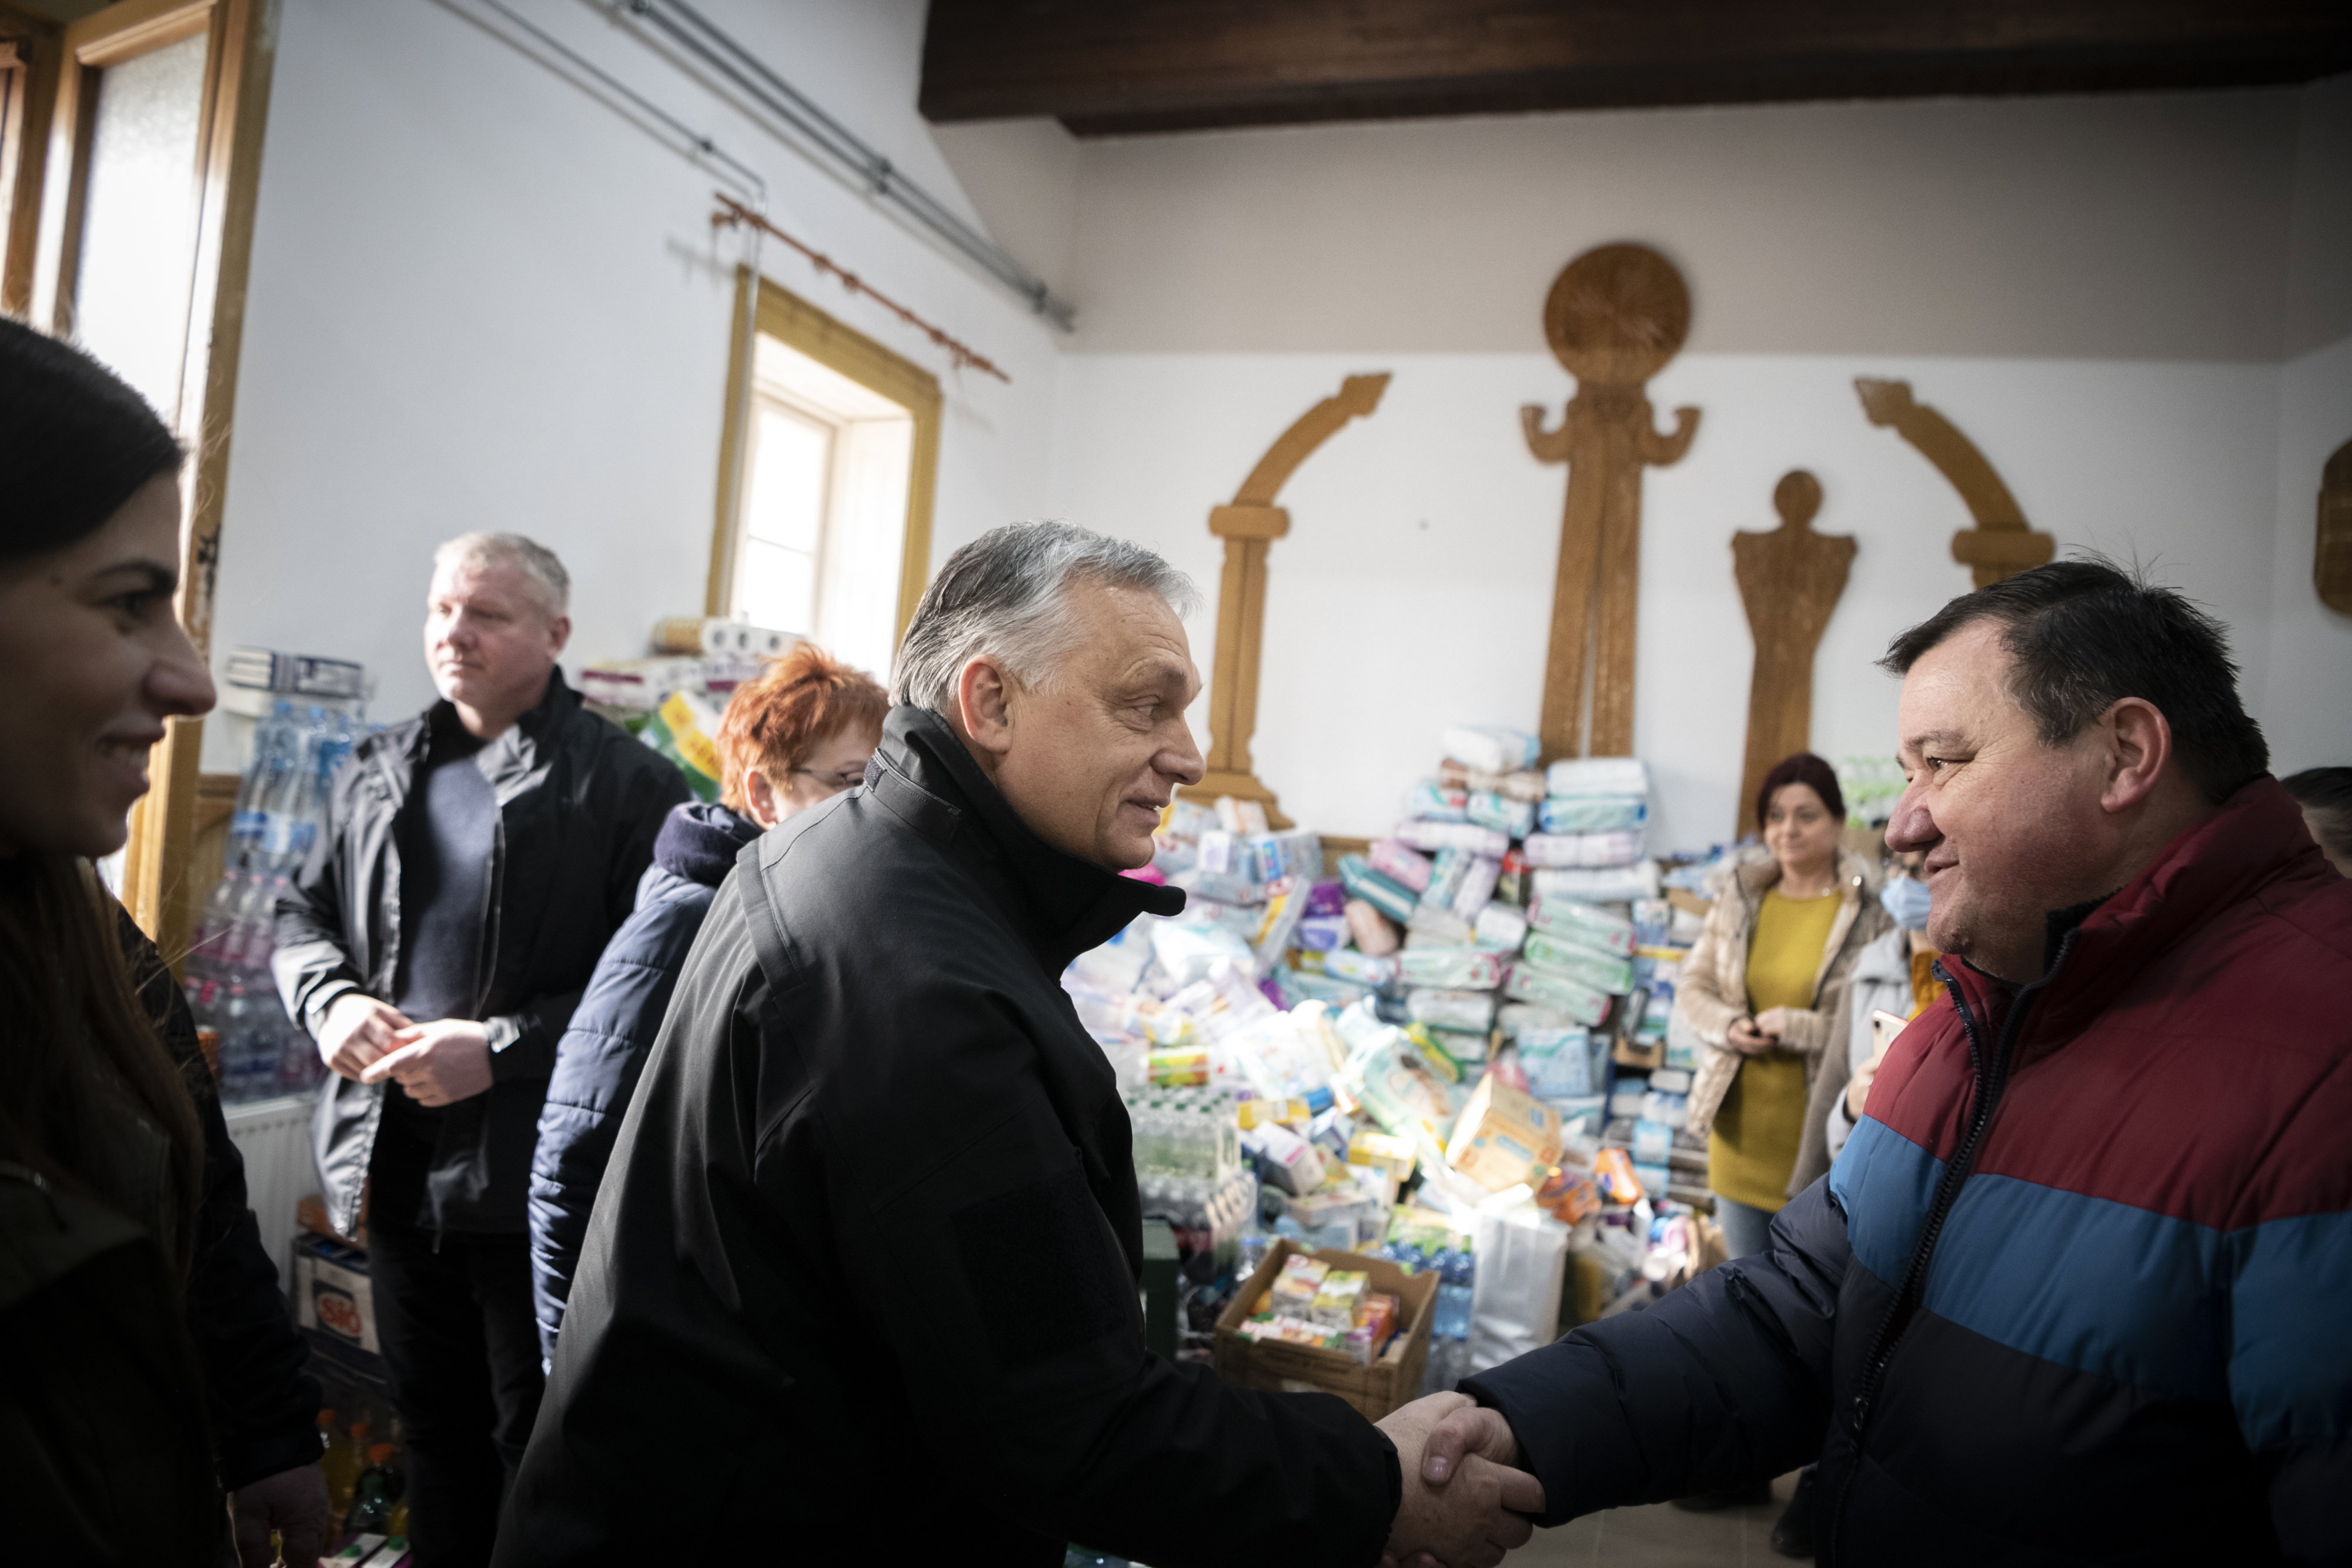 Ukraine Crisis: Orbán visits refugees near border